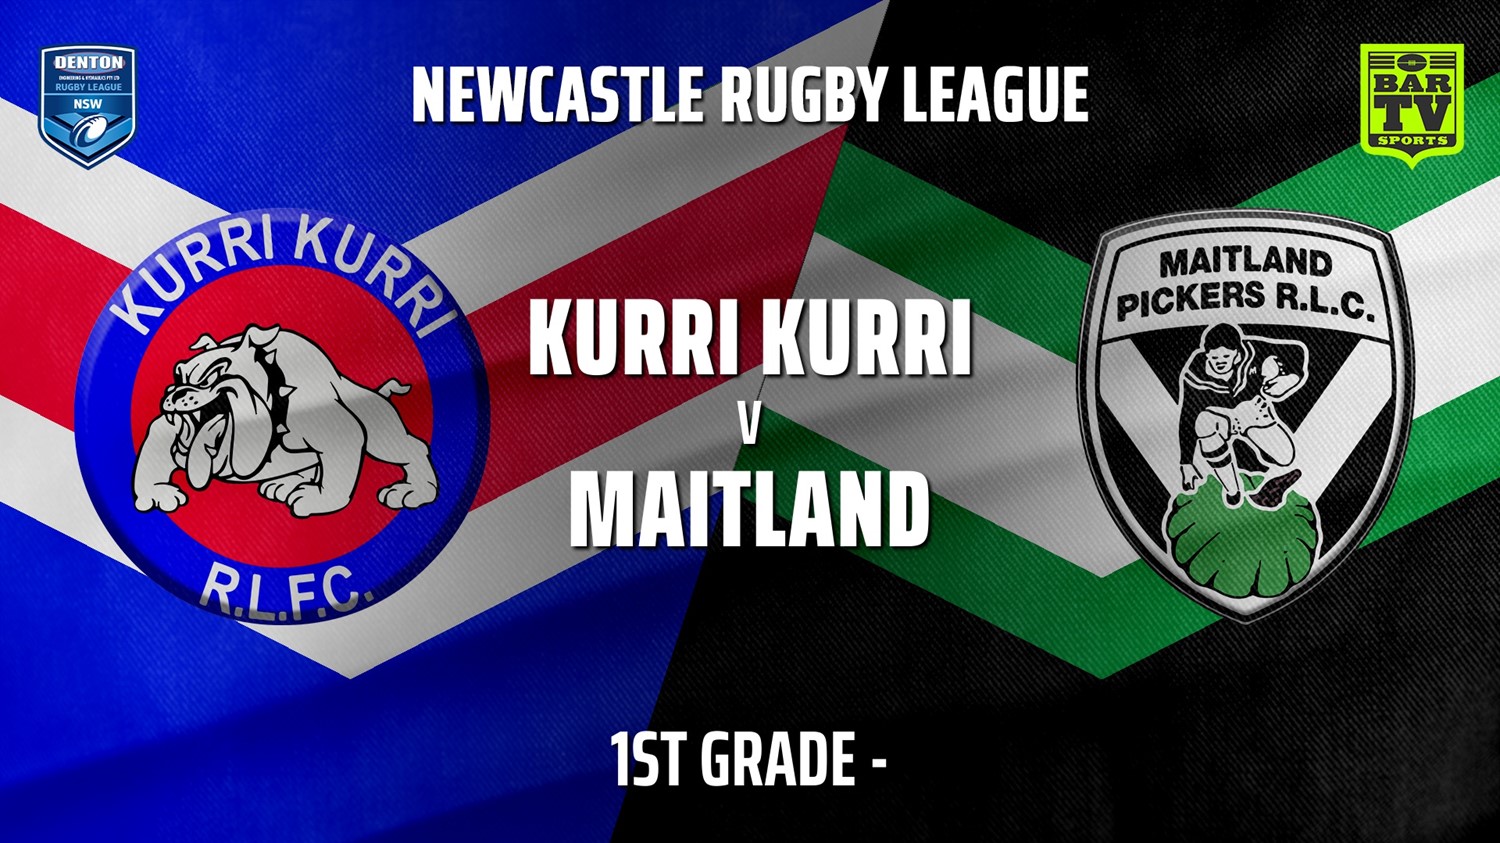 210627-Newcastle 1st Grade - Kurri Kurri Bulldogs v Maitland Pickers Slate Image